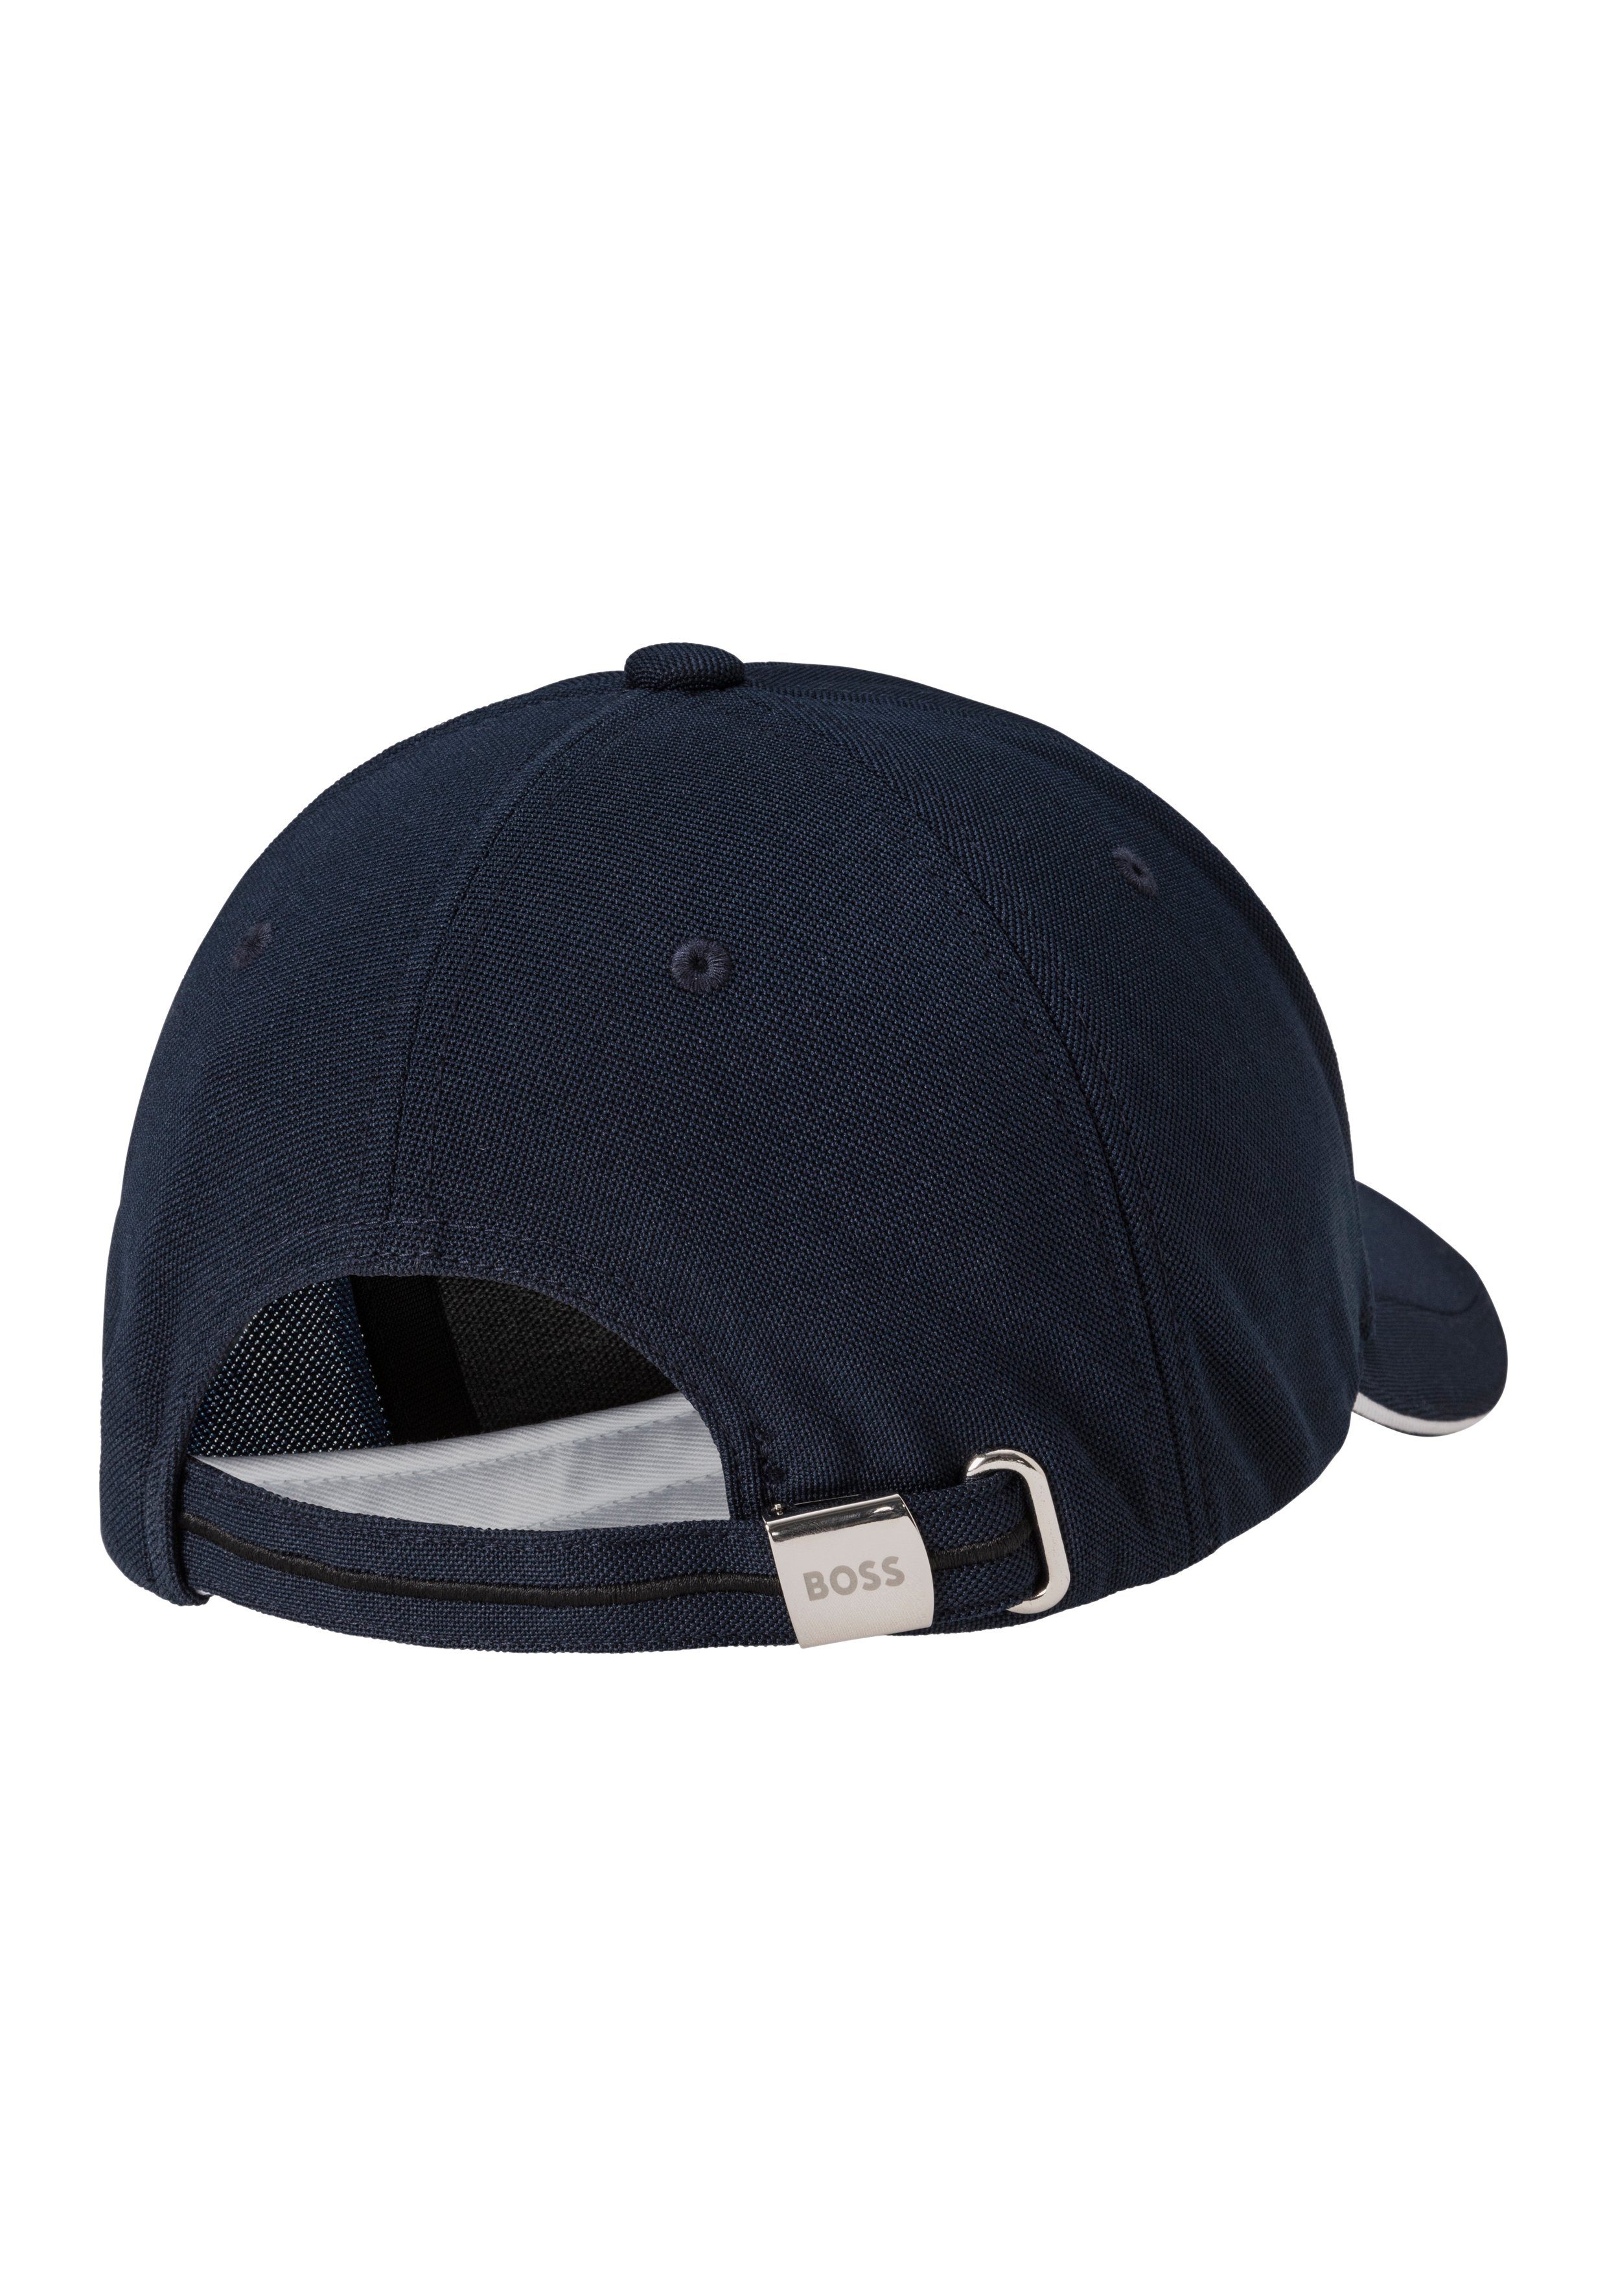 blue GREEN dark Cap mit Cap-US BOSS Schirmdetail Baseball kontrastfarbenem